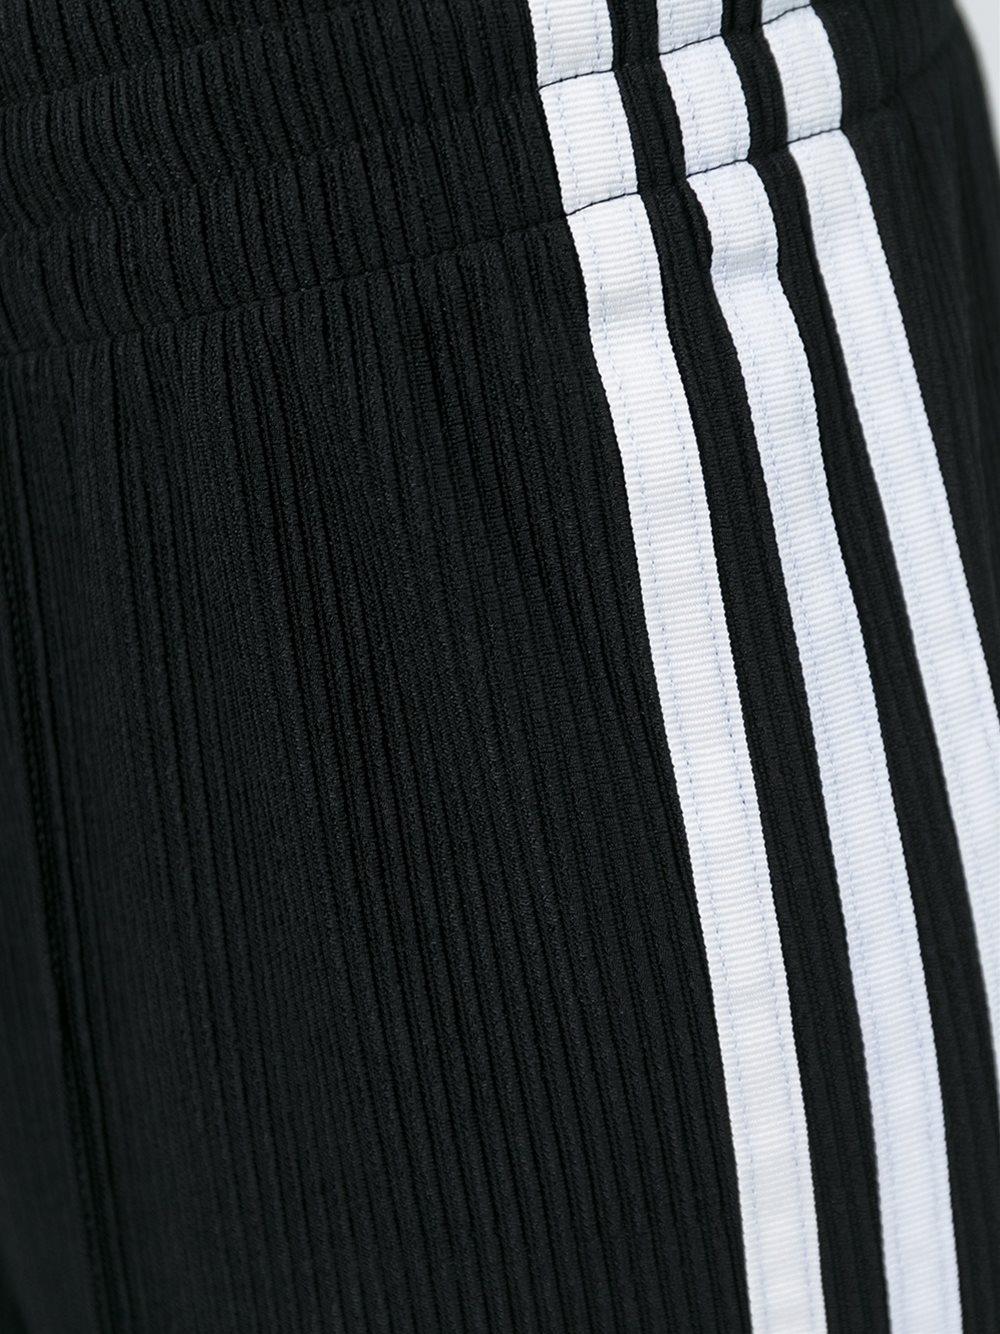 adidas Originals Flared Three Stripe Trousers in Black - Lyst